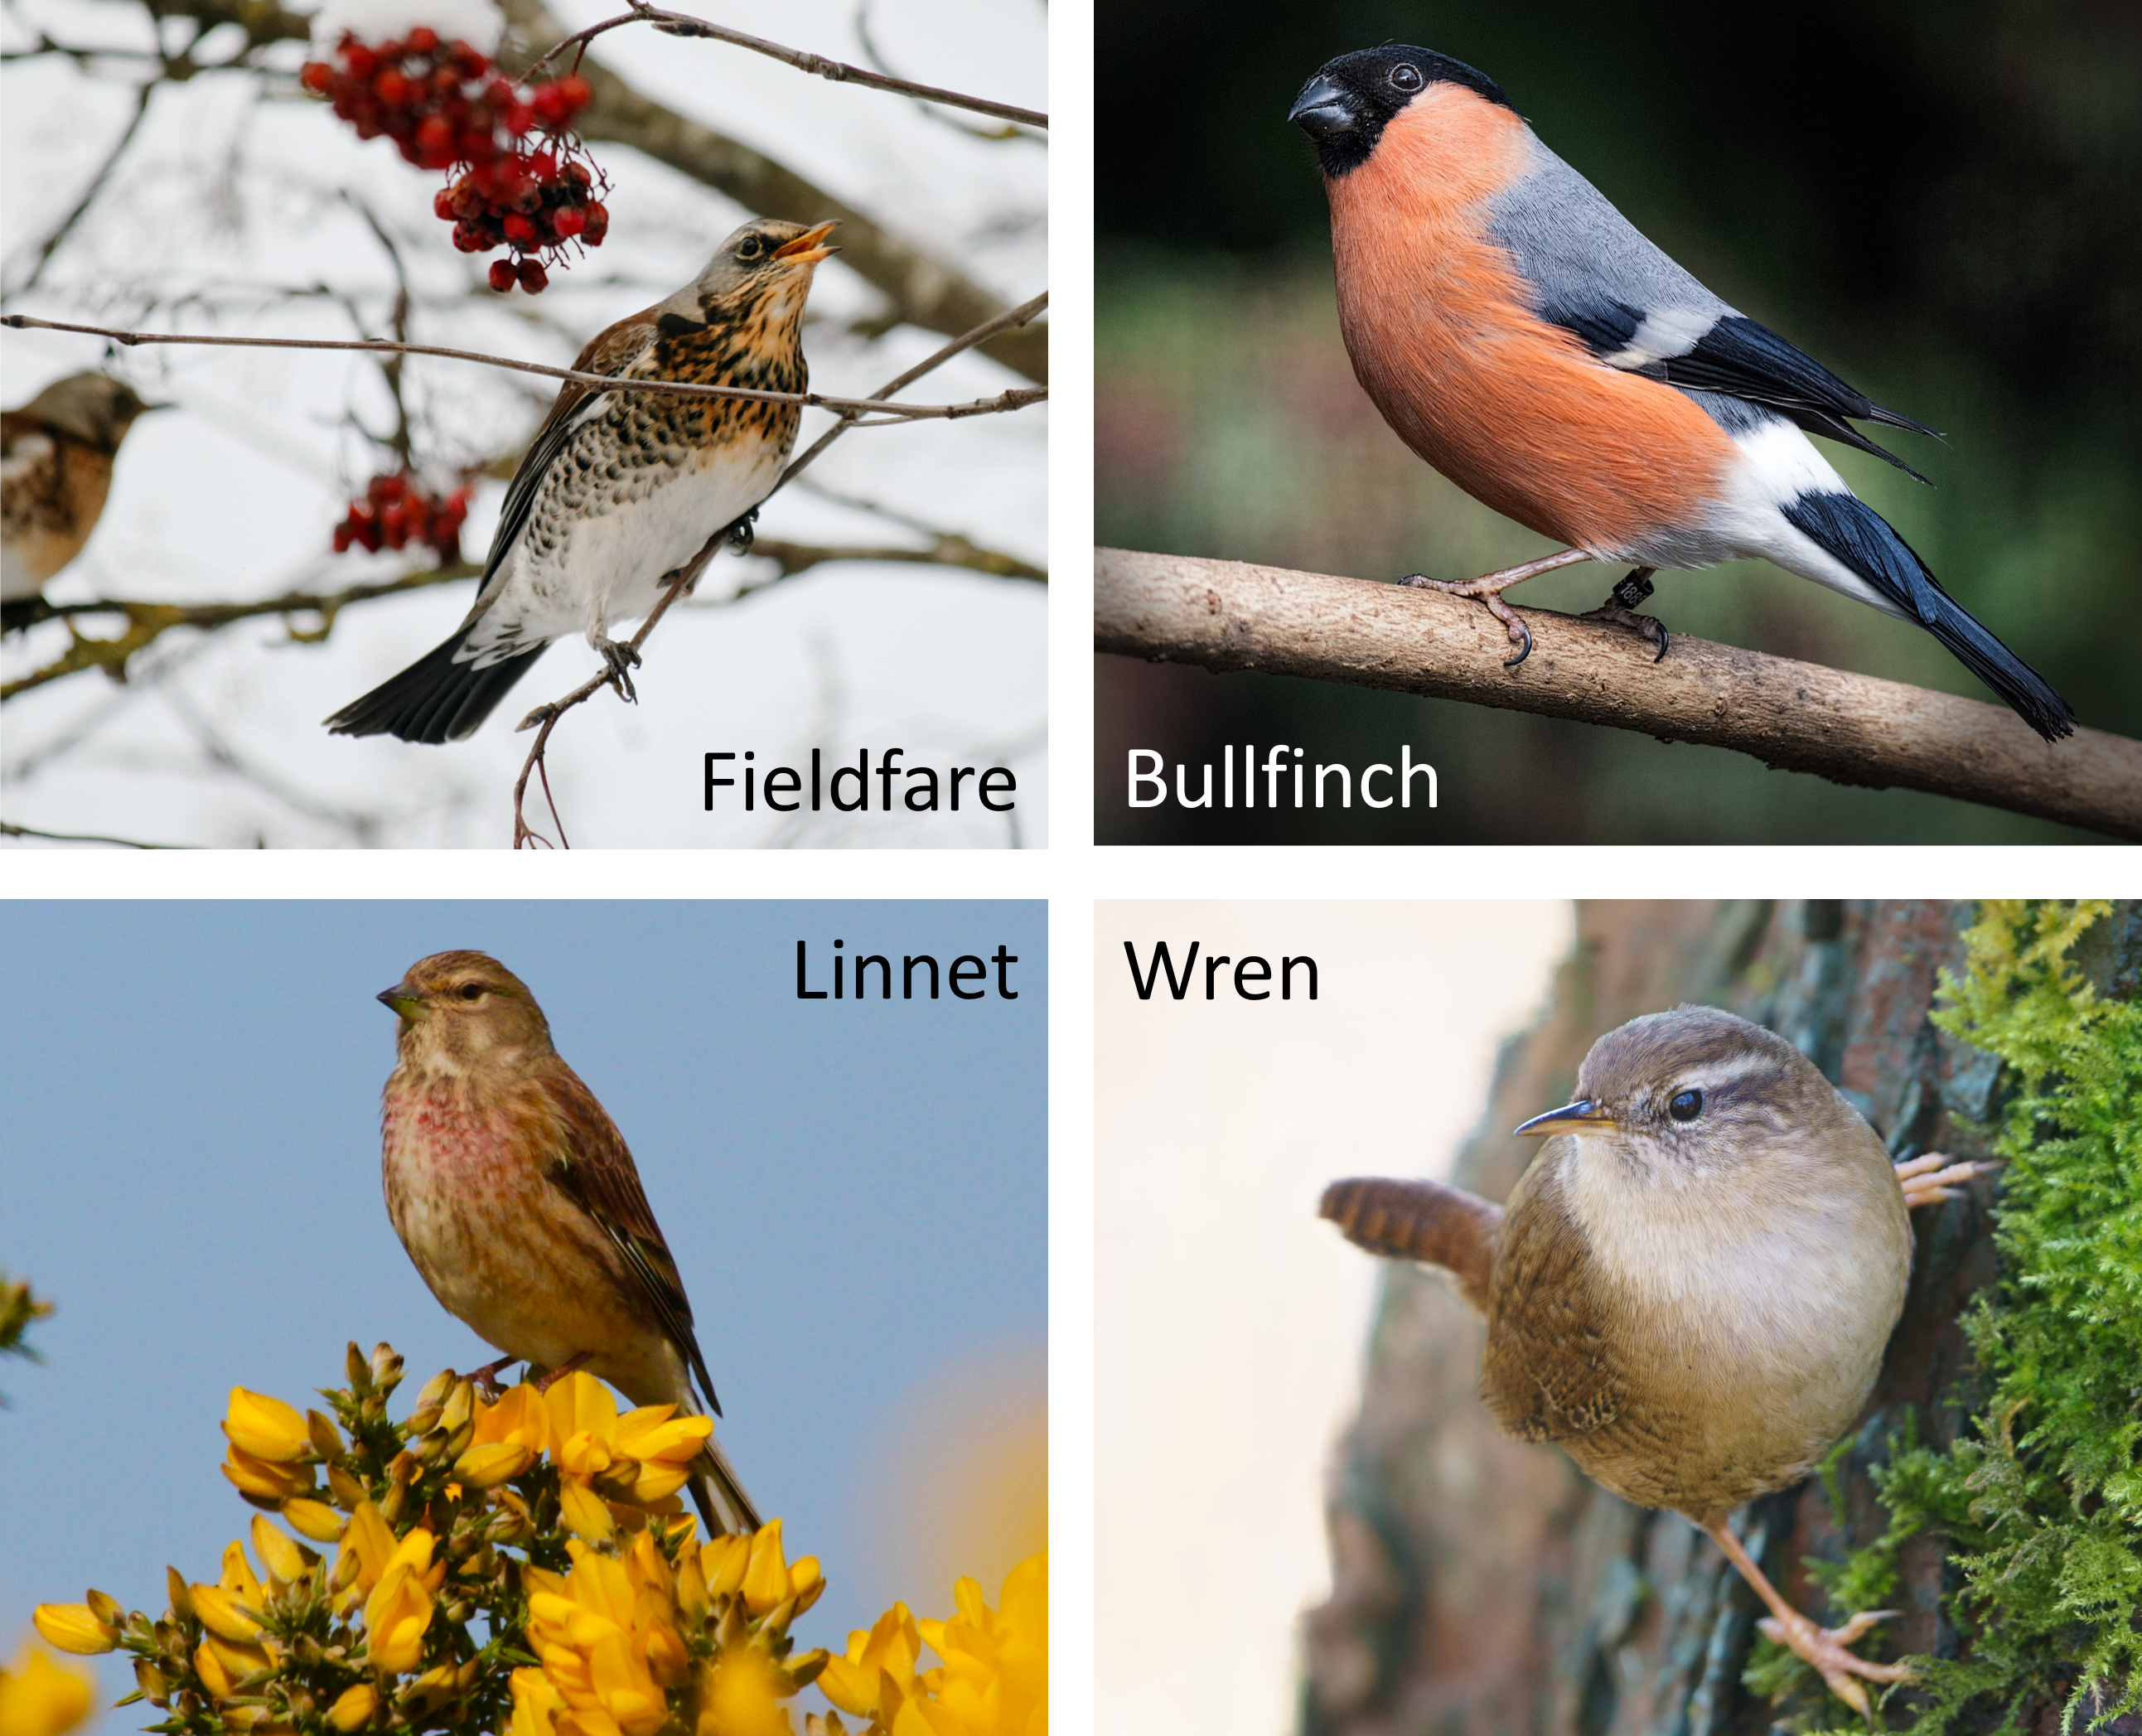 4 endangered British birds, the fieldfare, the bullfinch, the linnet and the wren